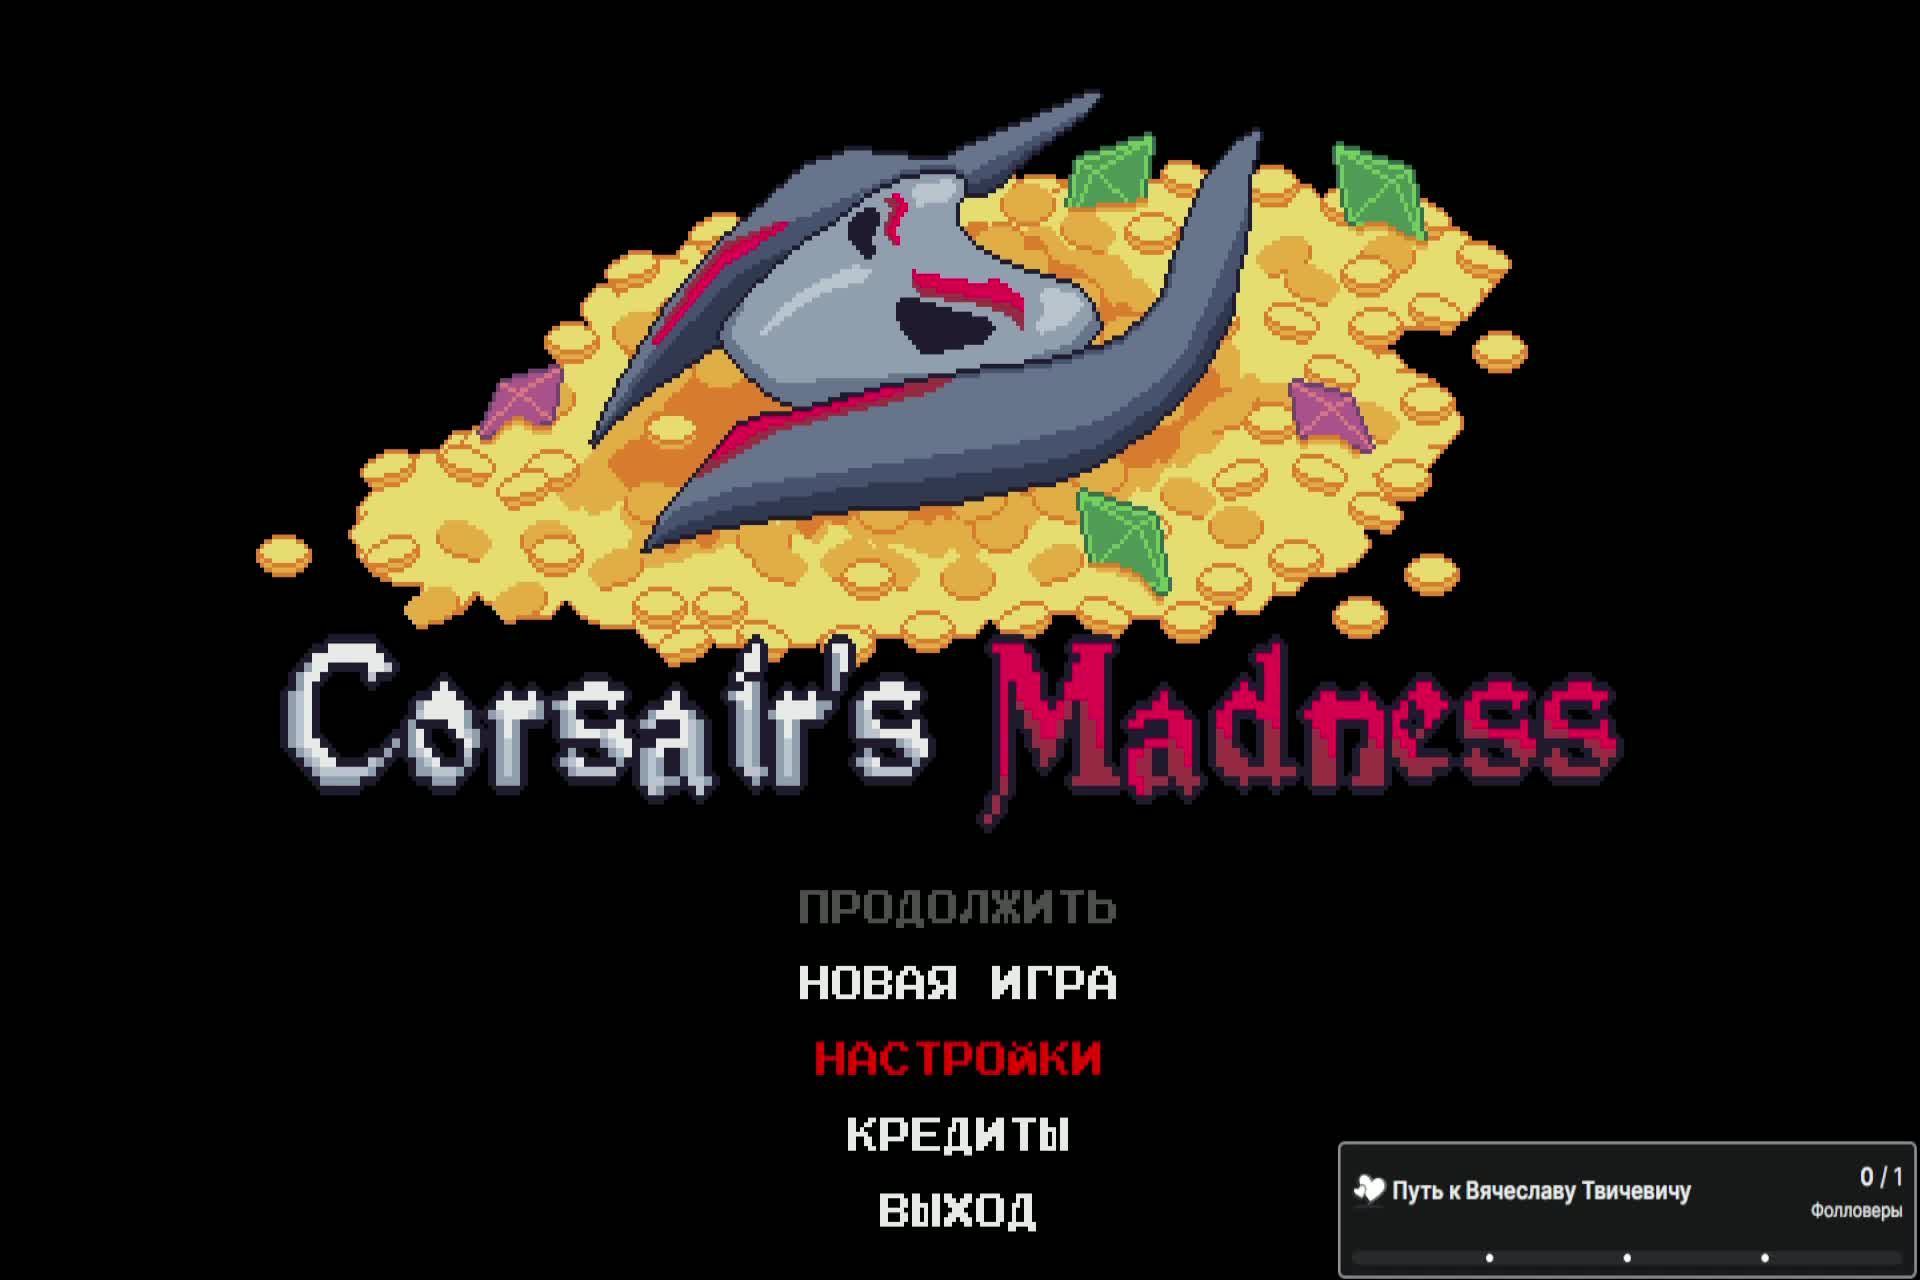 Пиратское безумие в игре Corsair`s Madness Prologue Jungle`s Island